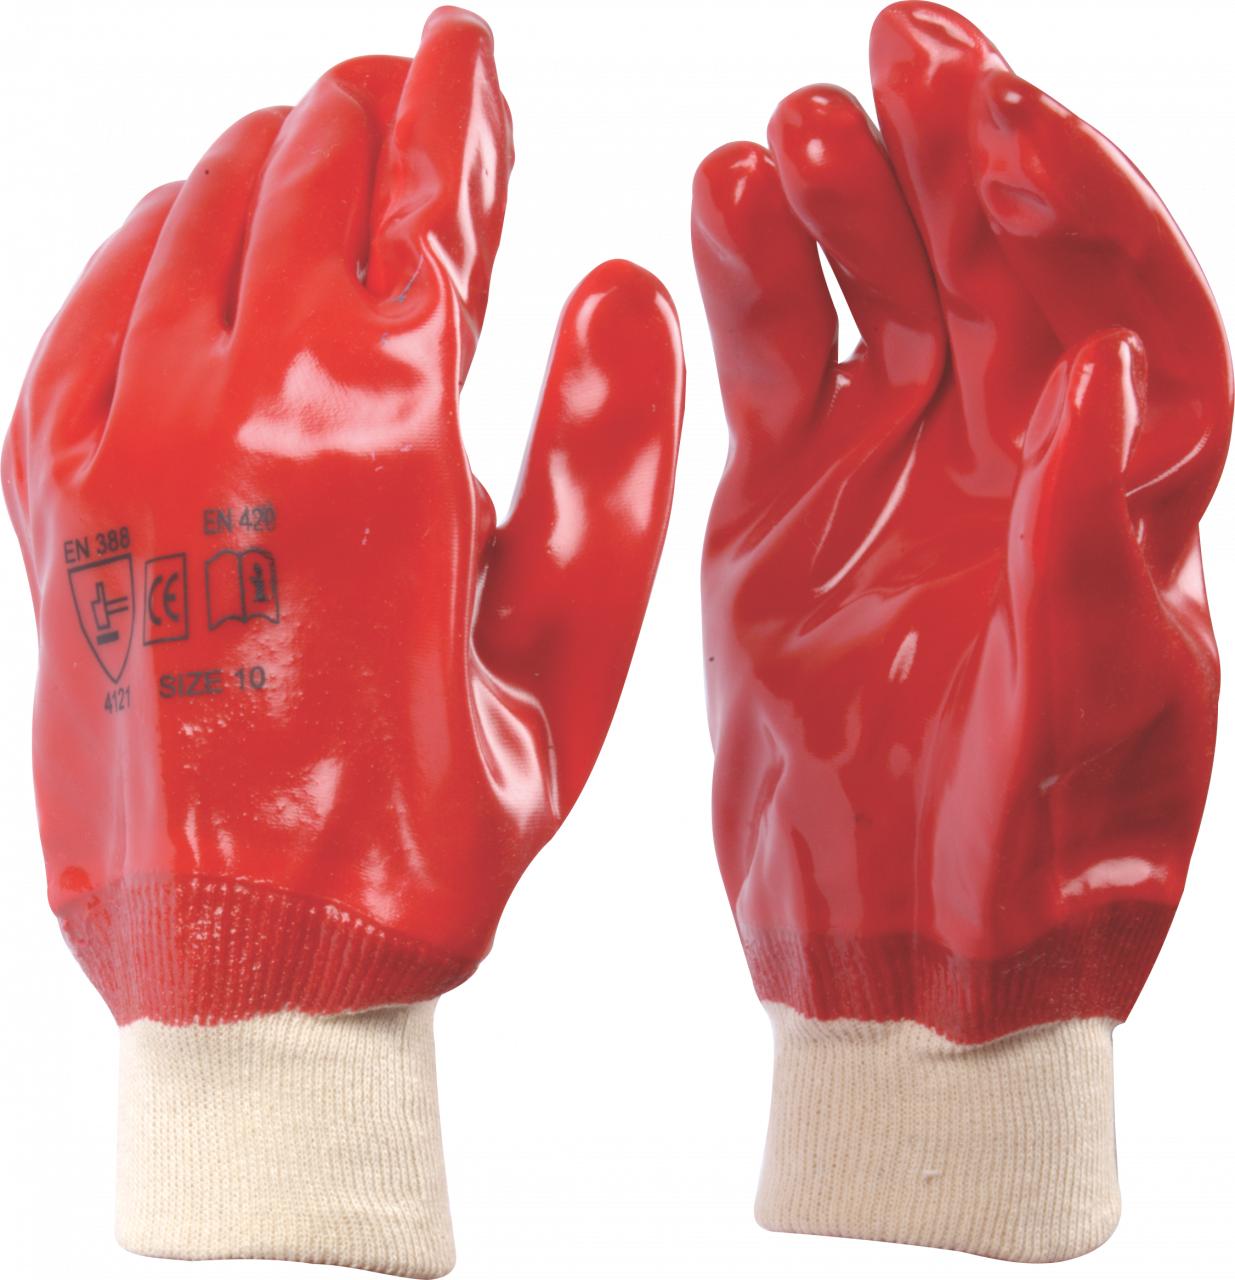 Glove Pvc Elbow Length Red Medium Weight